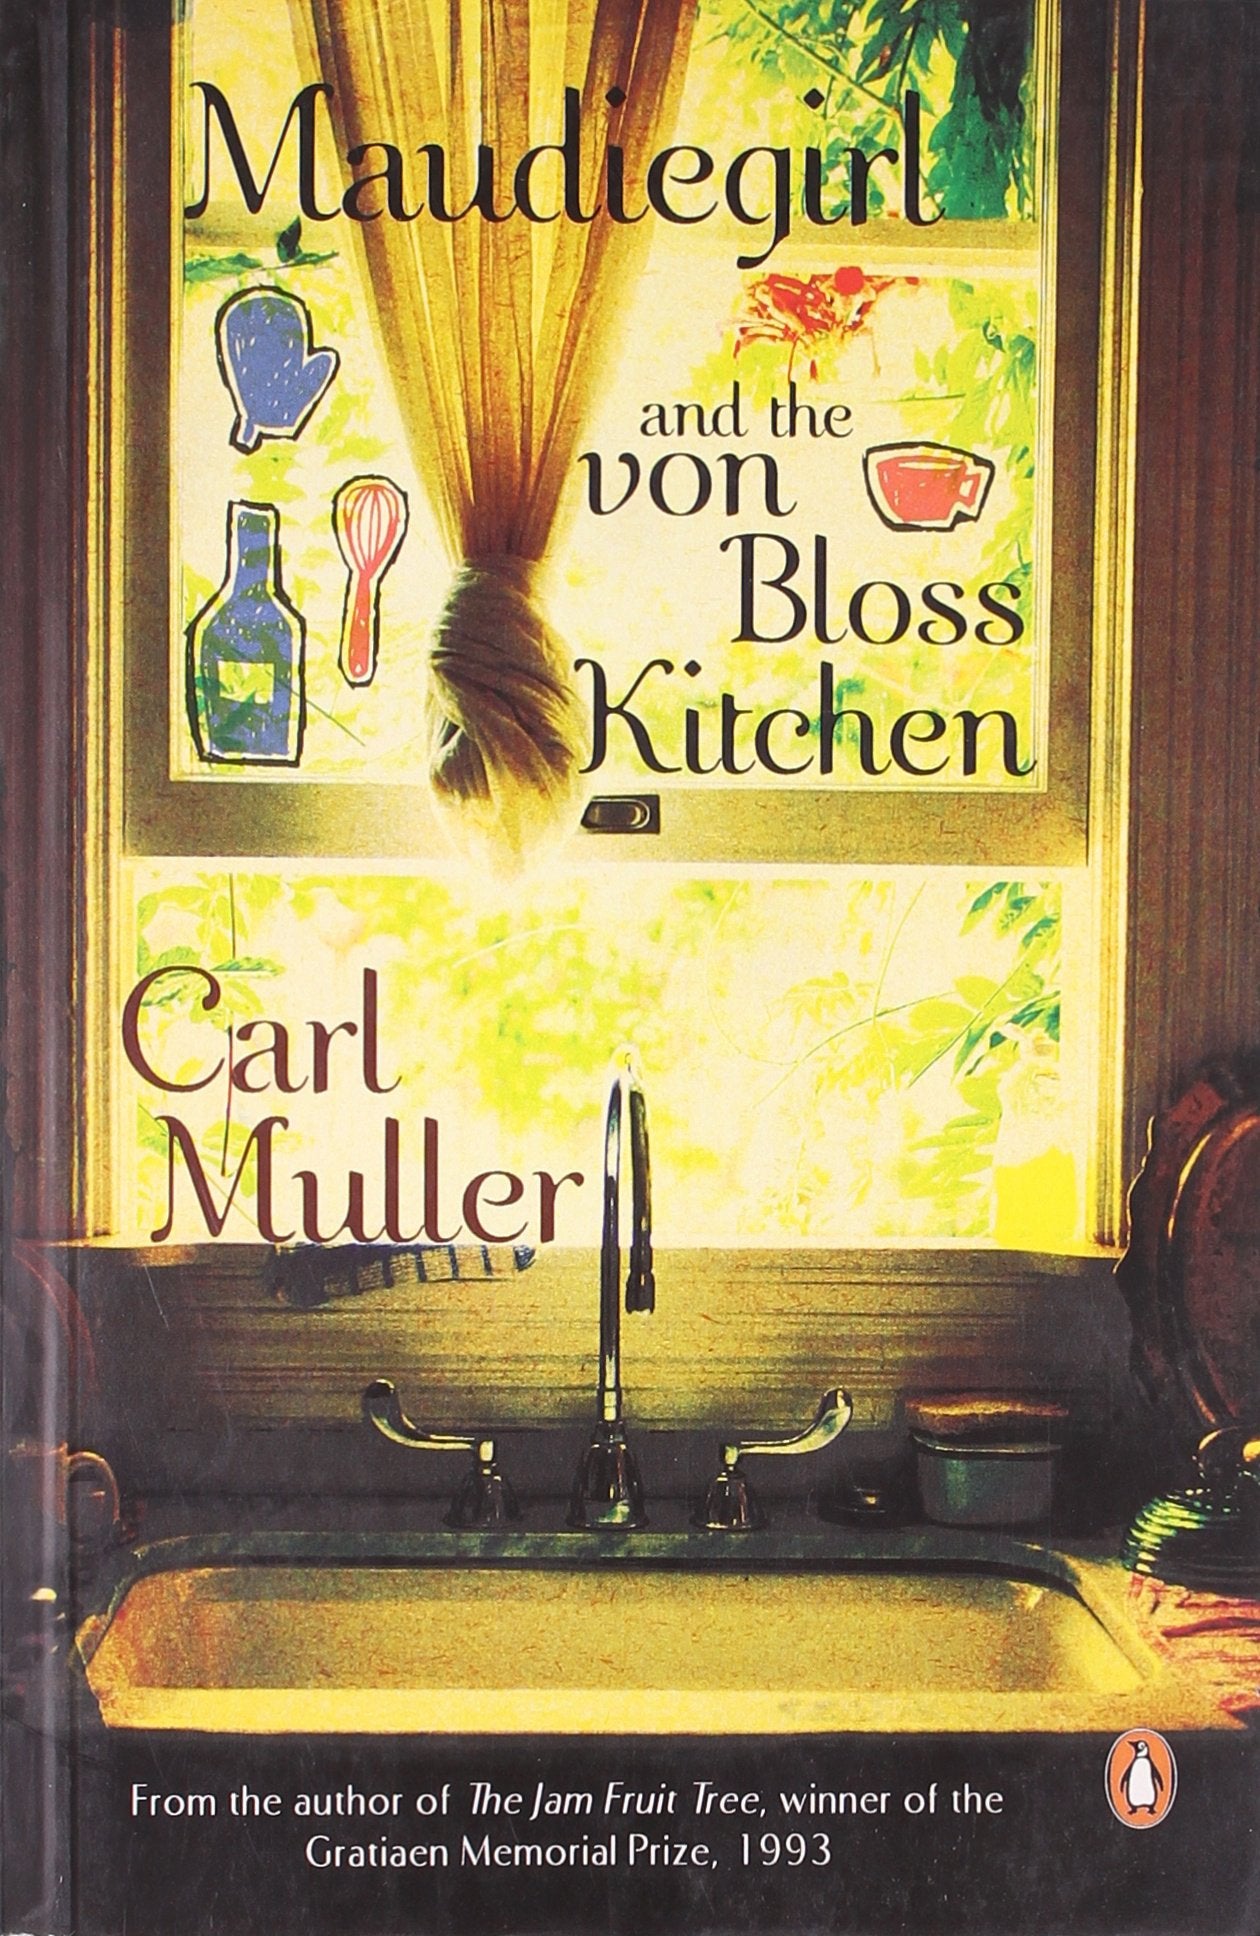 Maudiegirl and the Von Bloss Kitchen by Carl Muller